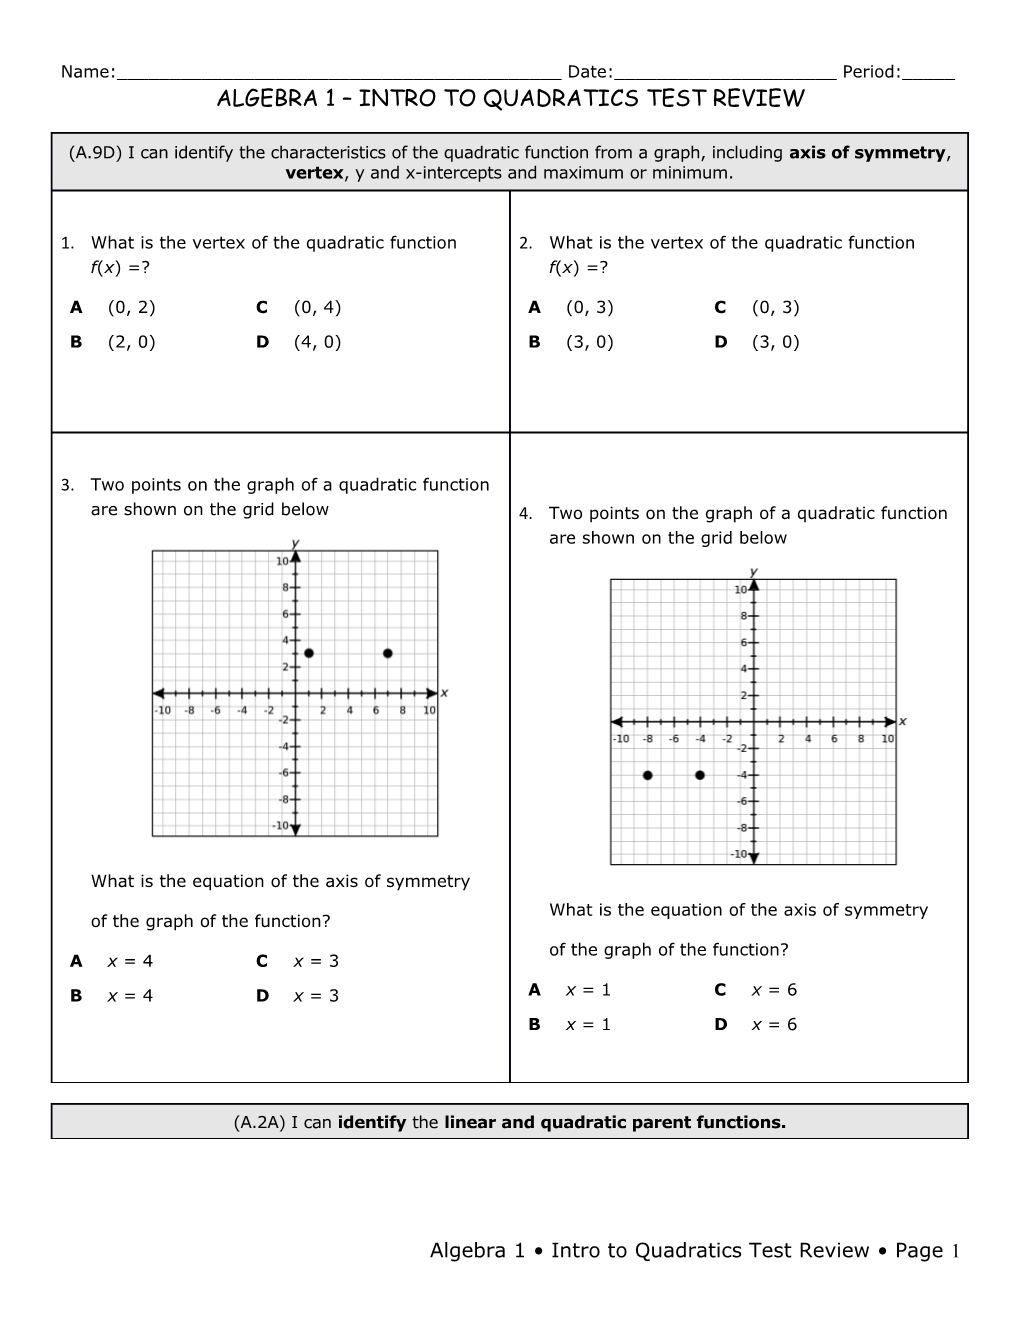 ALGEBRA 1 Intro to Quadratics Test Review